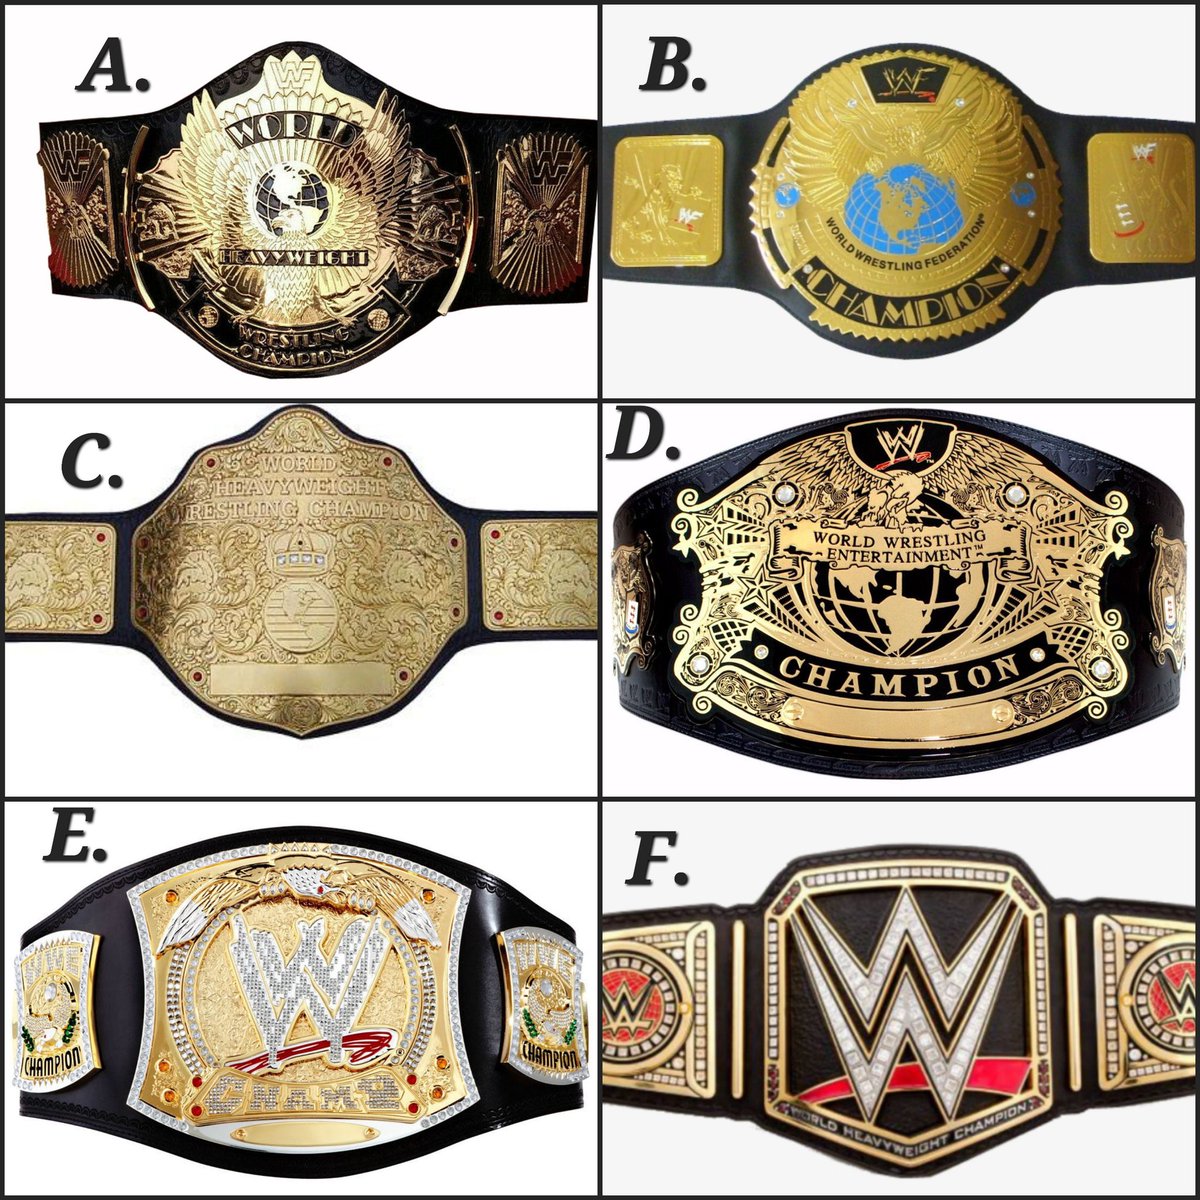 Favorite Championship Belt? https://t.co/FEn3zZA1UI.